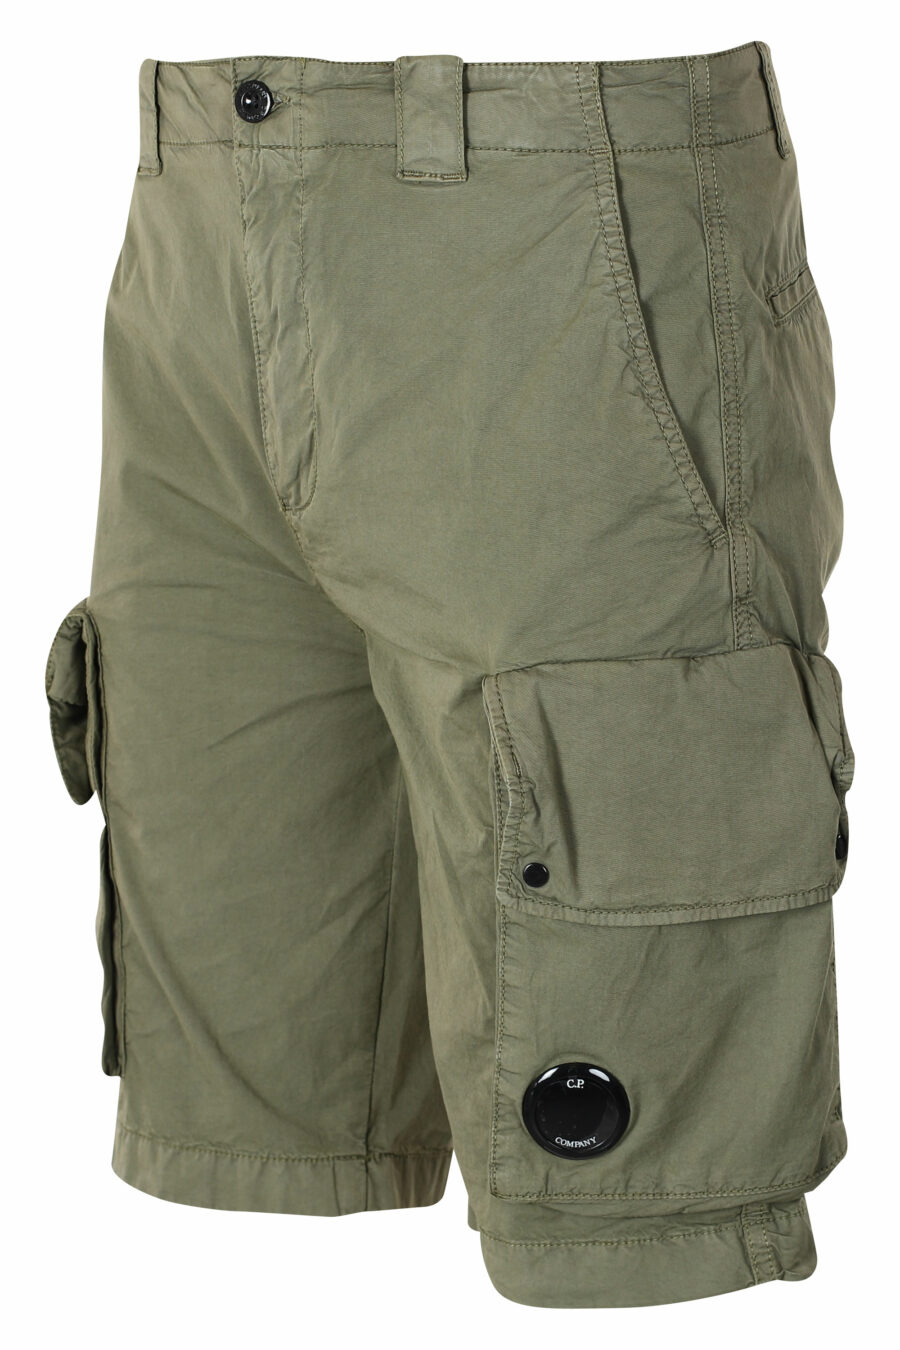 Pantalón corto verde militar con bolsillos laterales y minilogo circular - IMG 9581